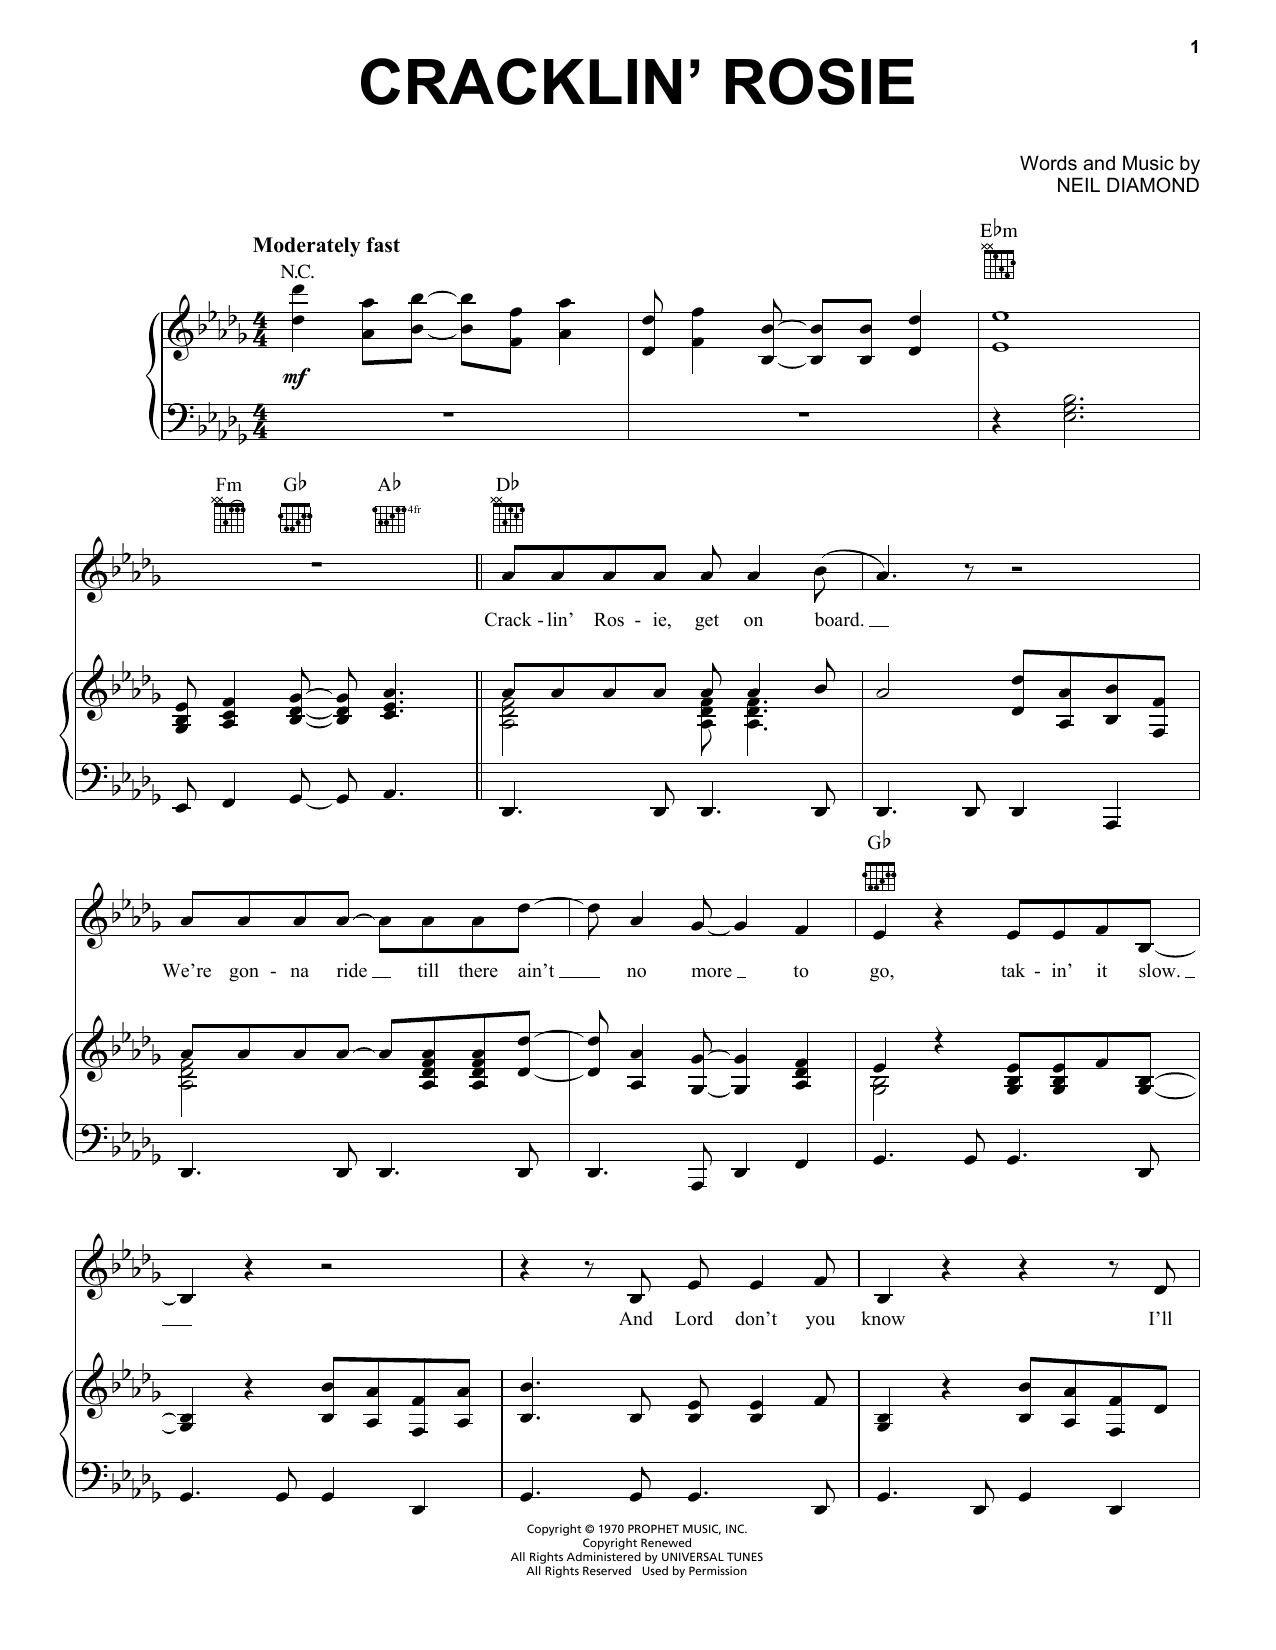 Neil Diamond Cracklin' Rosie Sheet Music Notes & Chords for Lyrics & Chords - Download or Print PDF